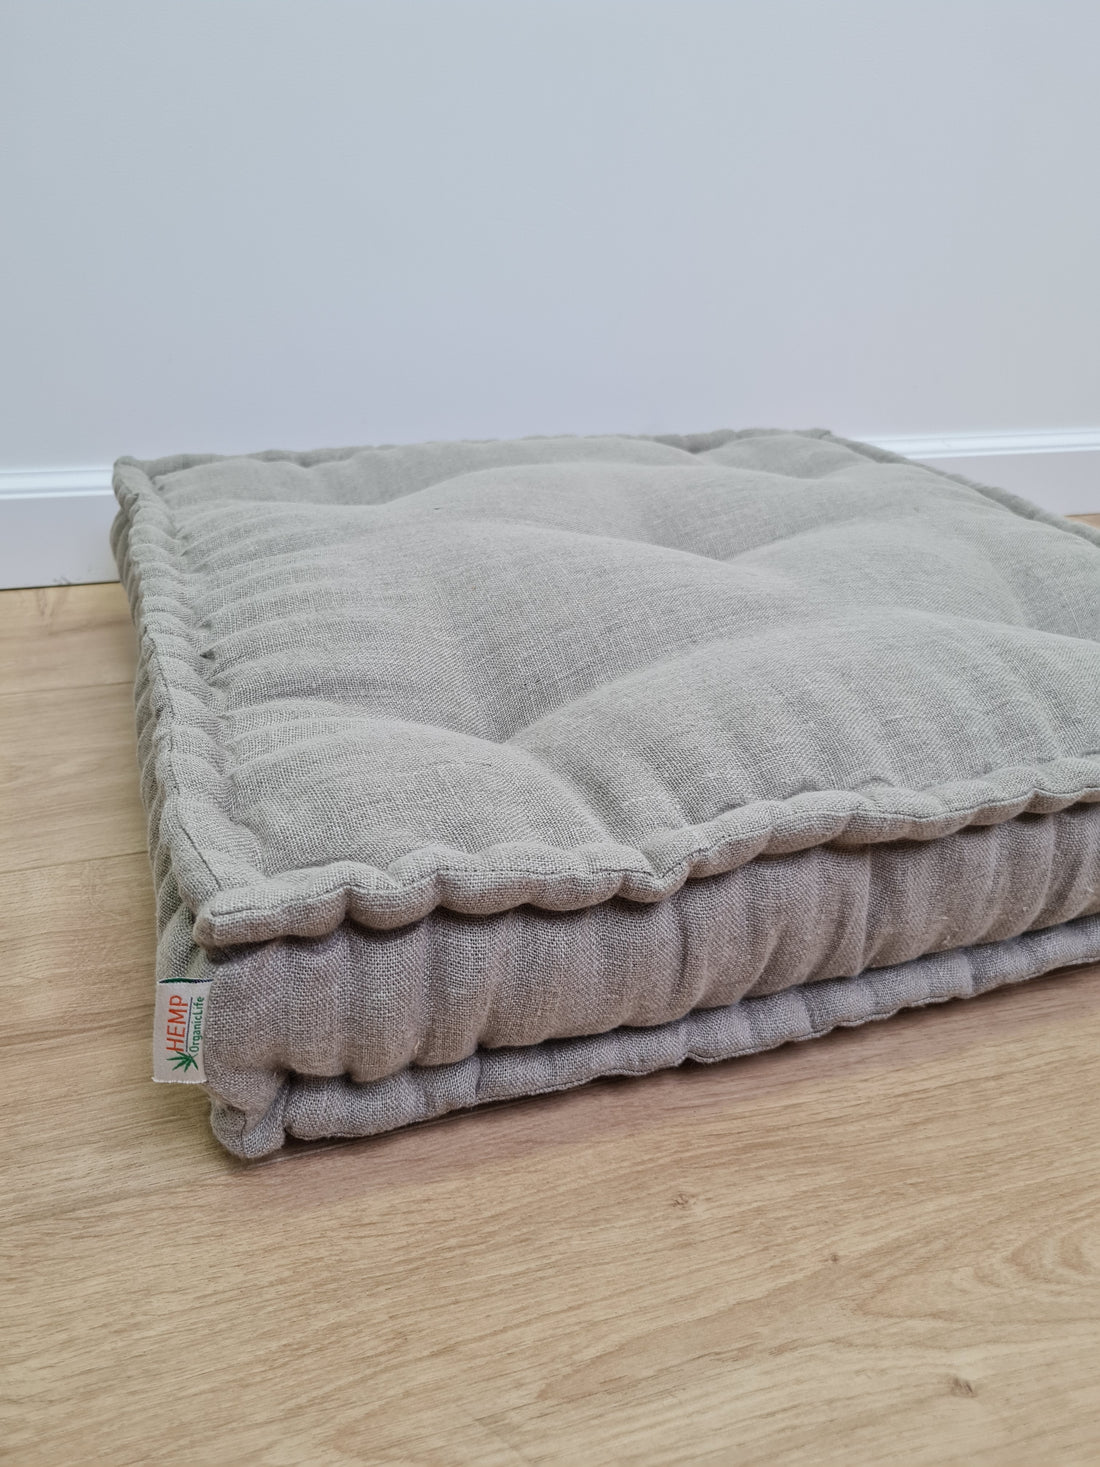 Hemp 20"x20" (50x50 cm) Floor cushion with organic hemp fiber filling in natural non dyed linen fabric / floor pillow Pillow seat /Natural